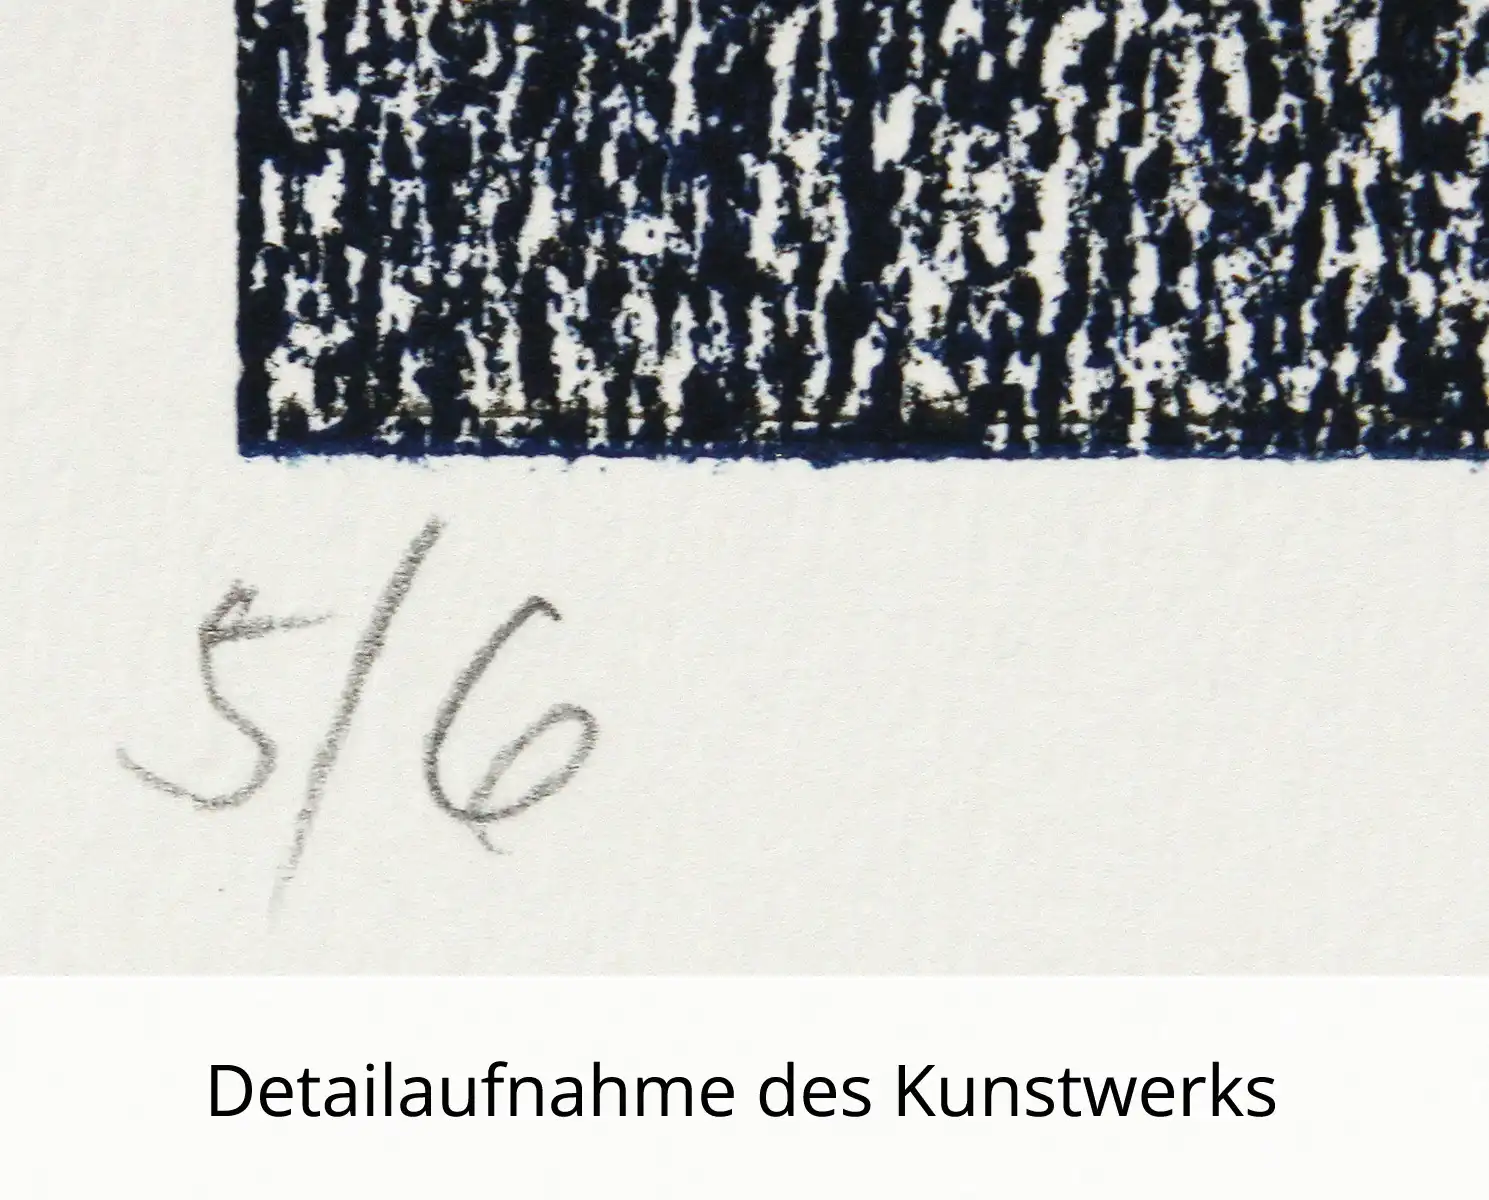 F.O. Haake: "Der Seiltänzer, Blatt 5/6", originale Grafik/serielles Unikat, mehrfarbiger Linoldruck